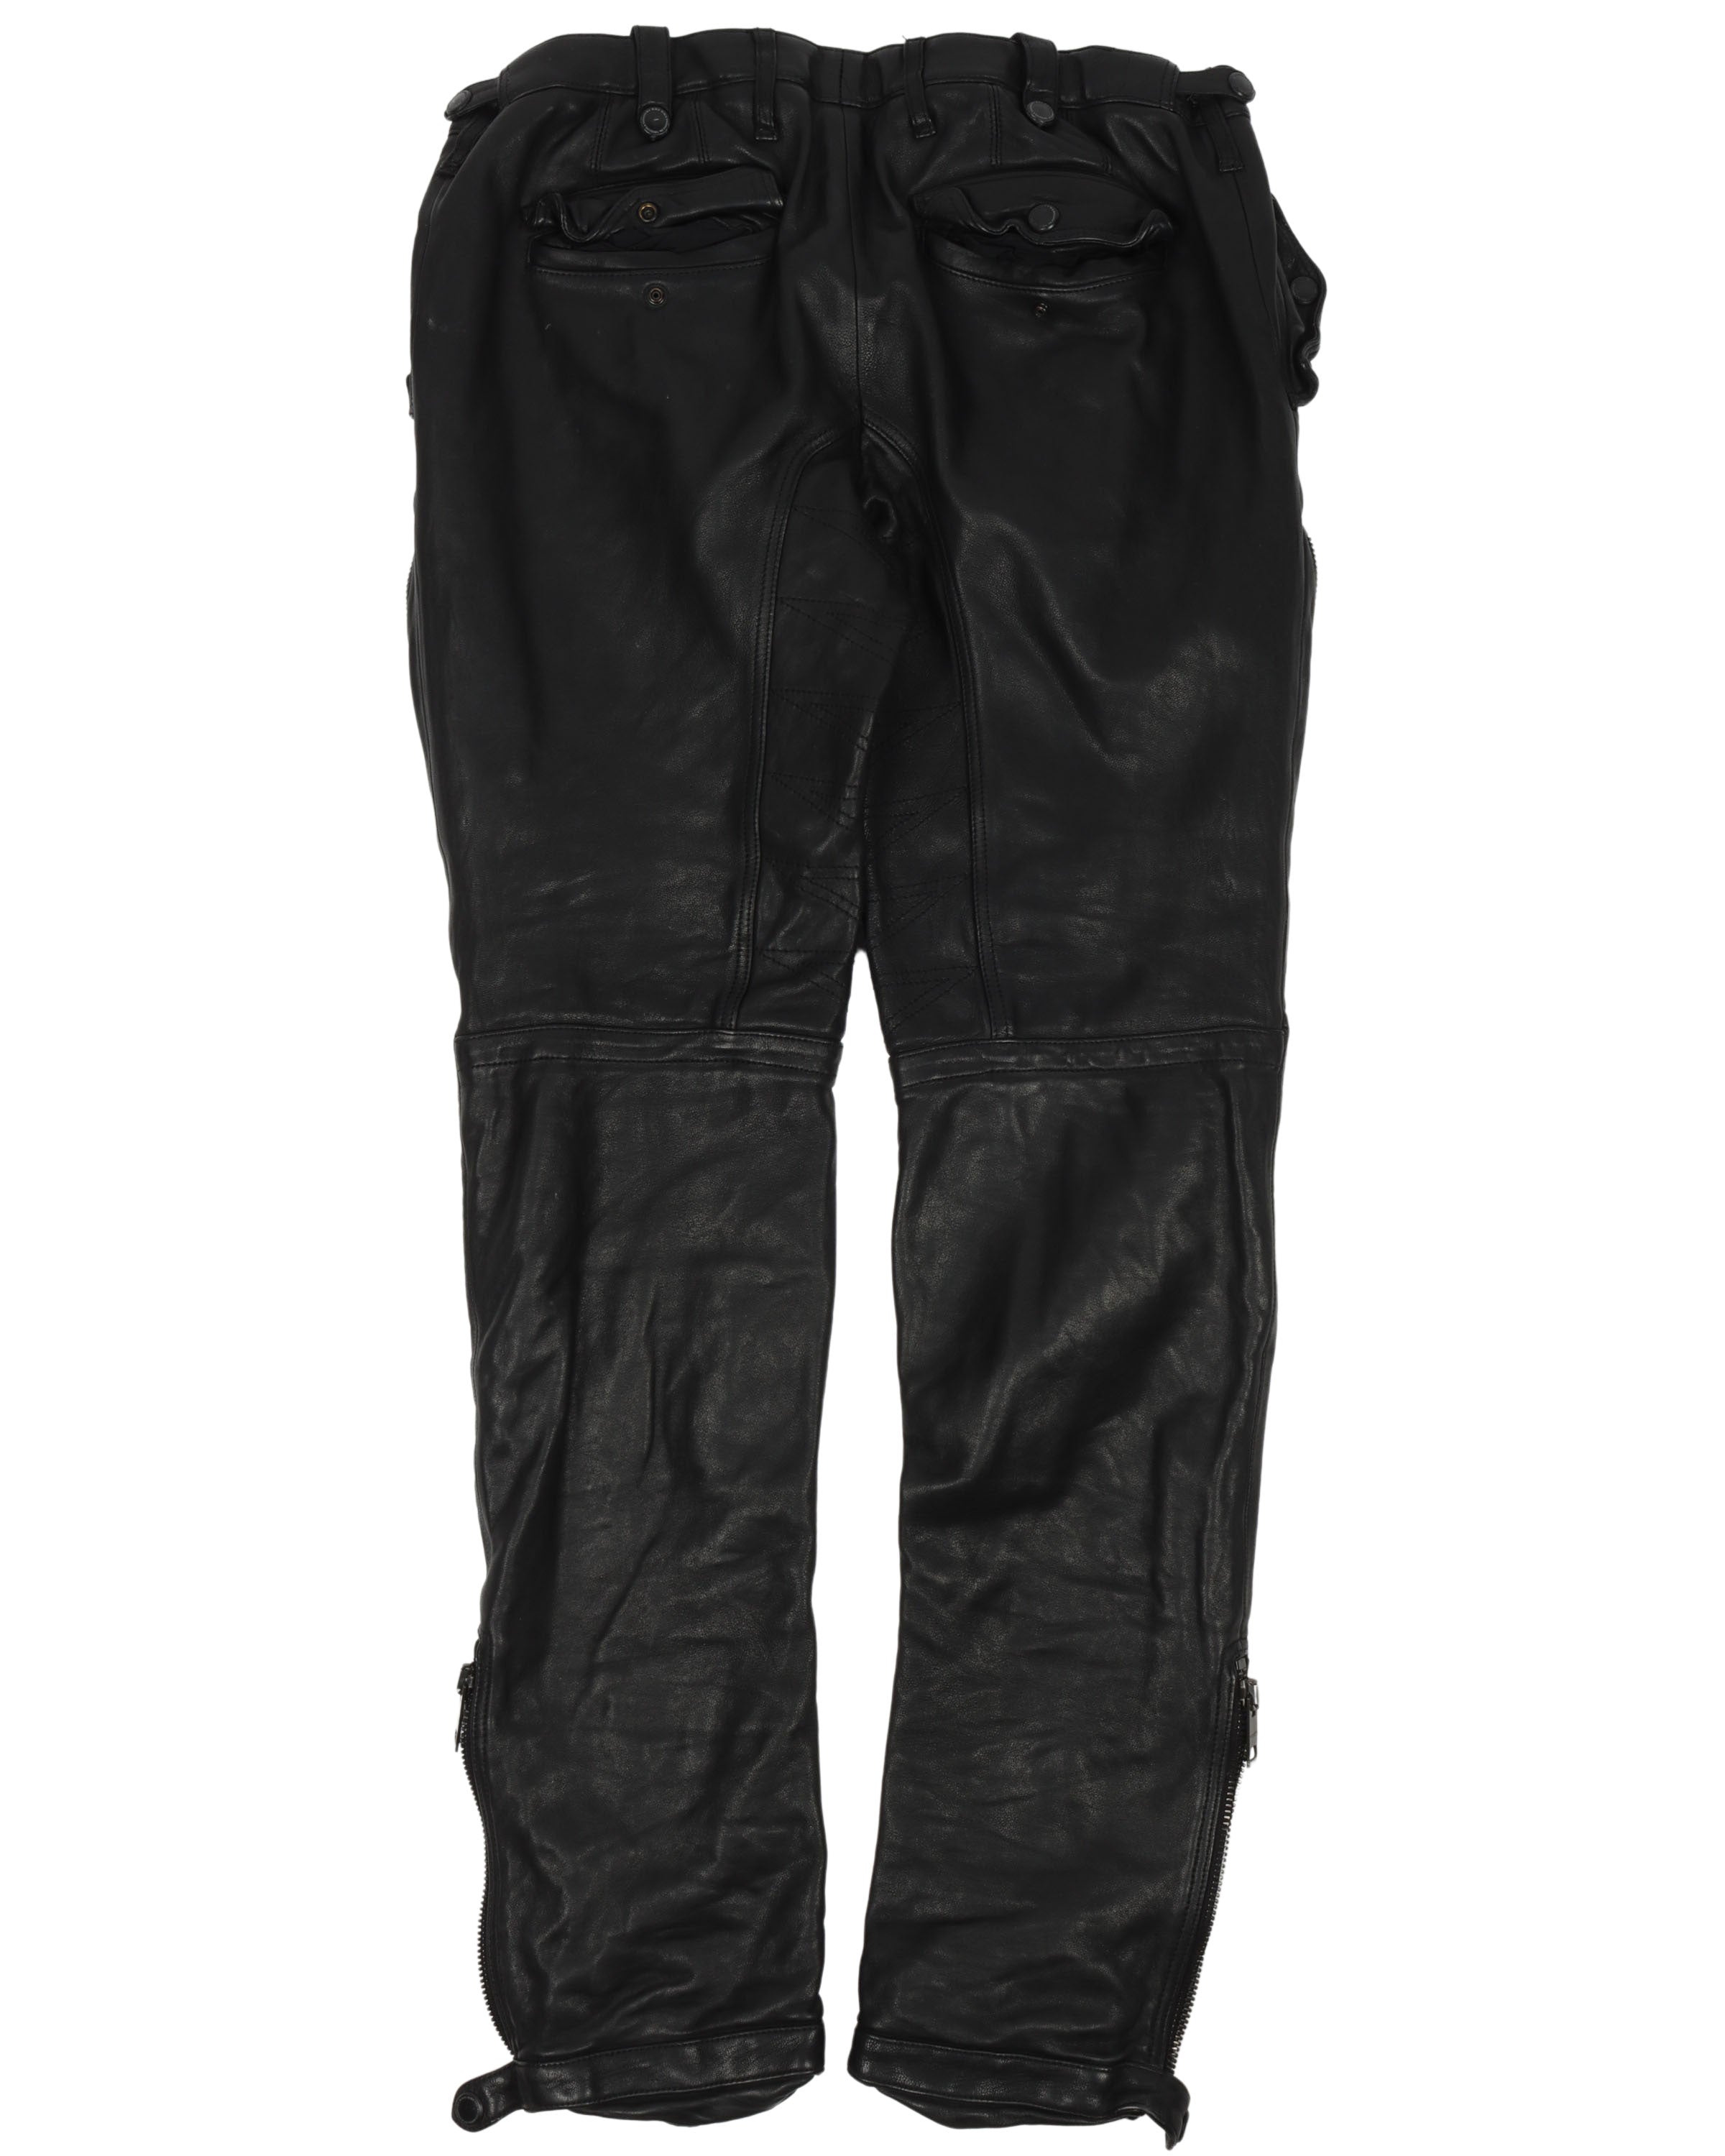 Leather Biker Pants